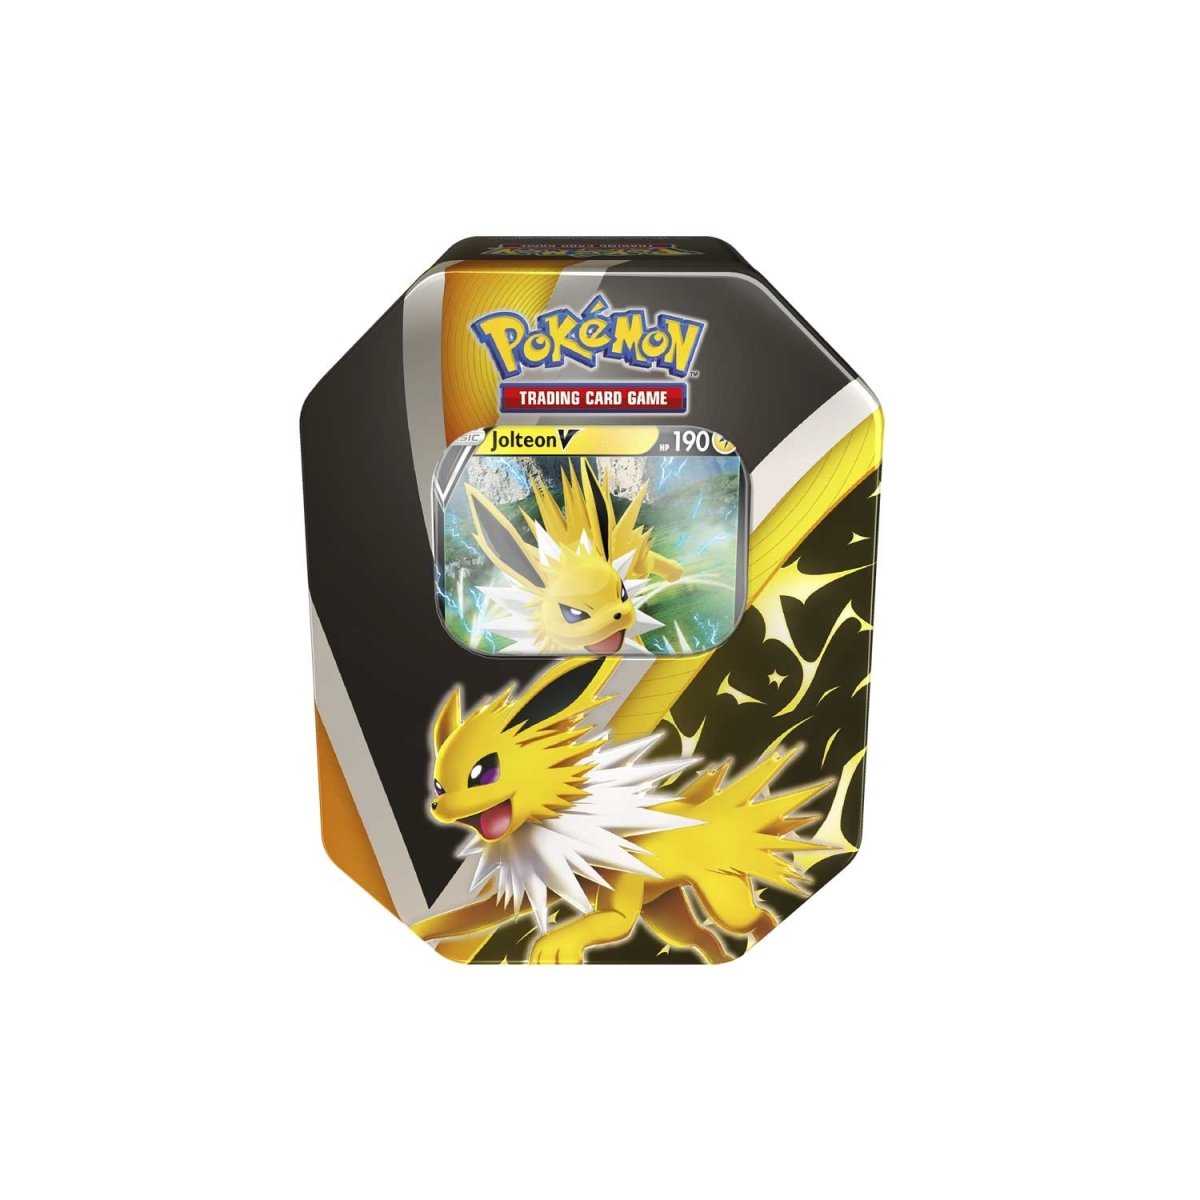 Eevee and Pikachu I Choose You Gold Metal Pokemon Card